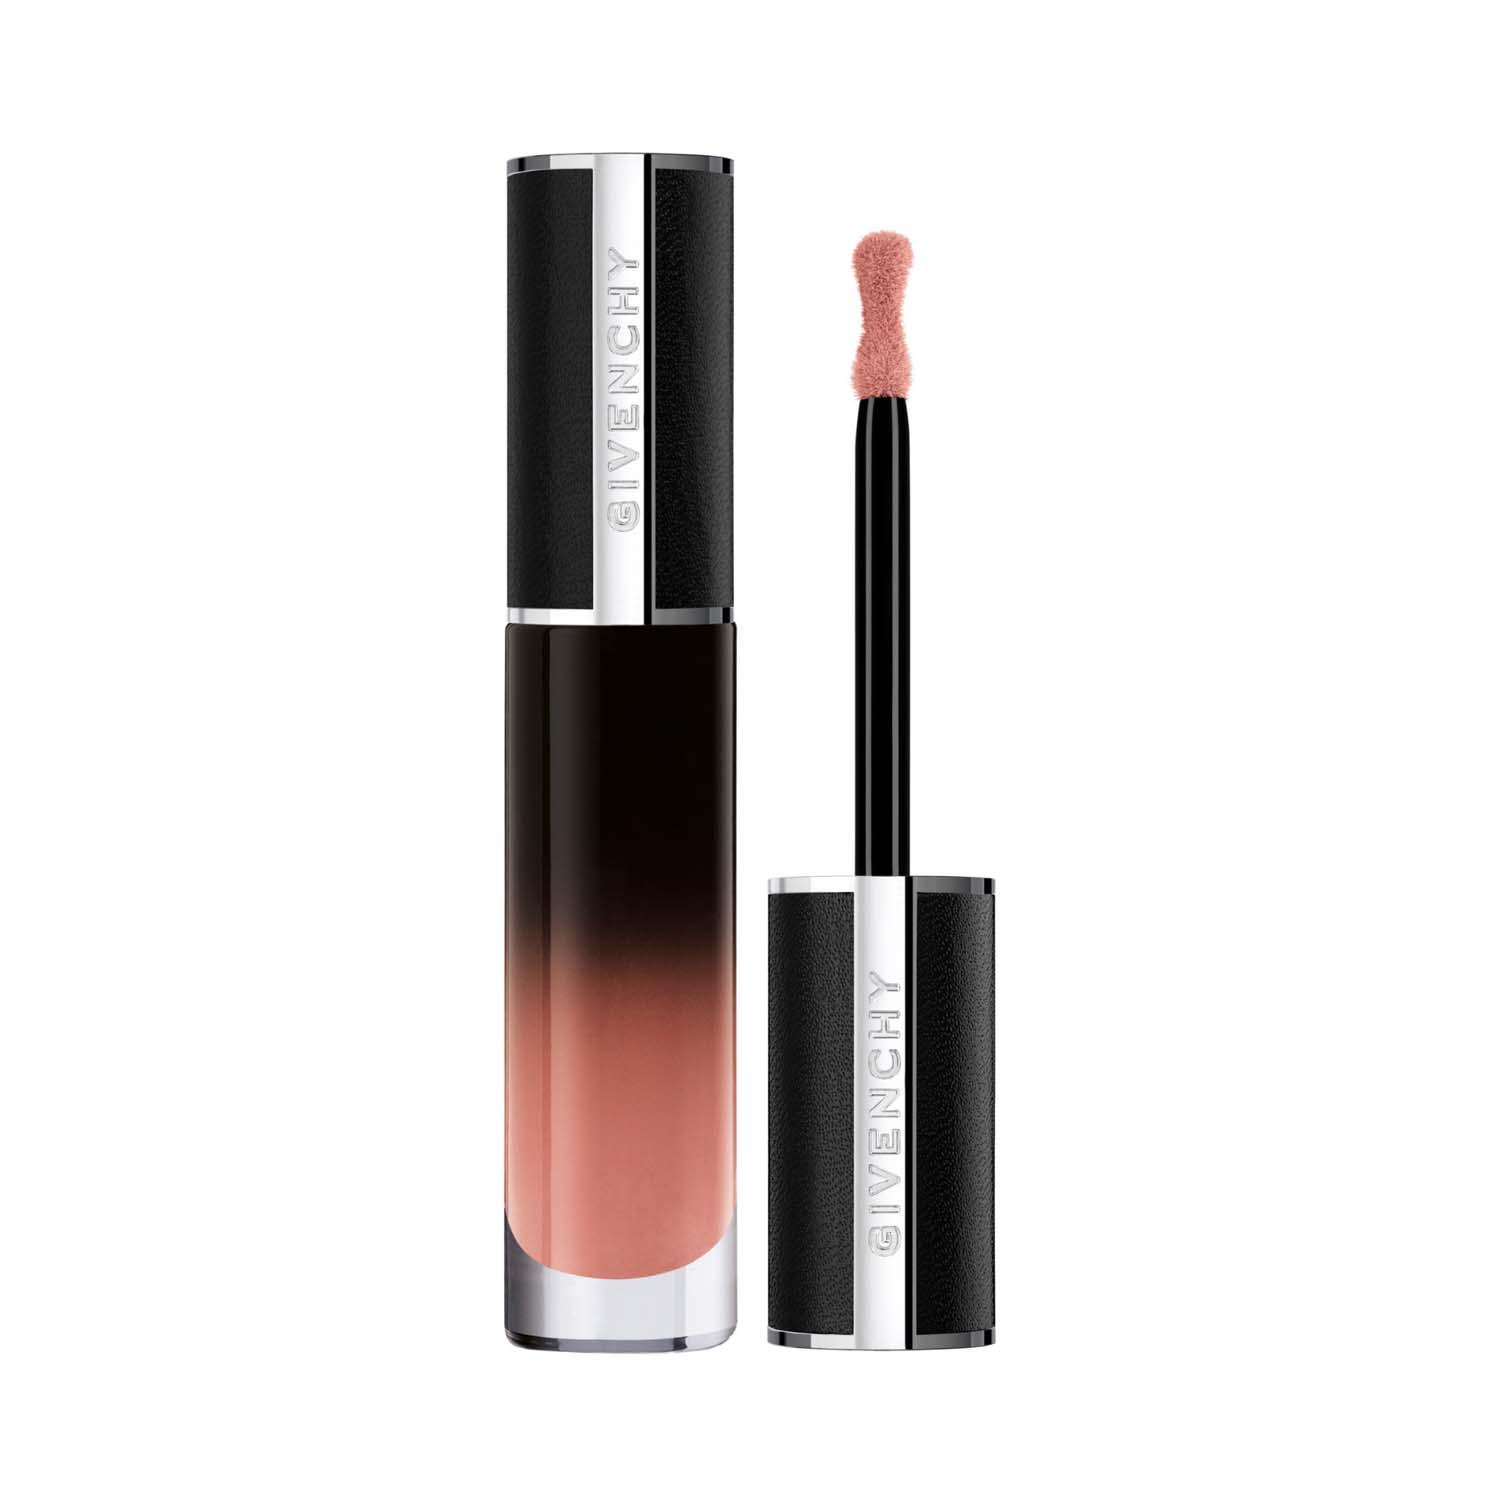 Givenchy | Givenchy Le Rouge Interdit Cream Velvet Liquid Lipstick - N10 Beige Nu (6.5 ml)